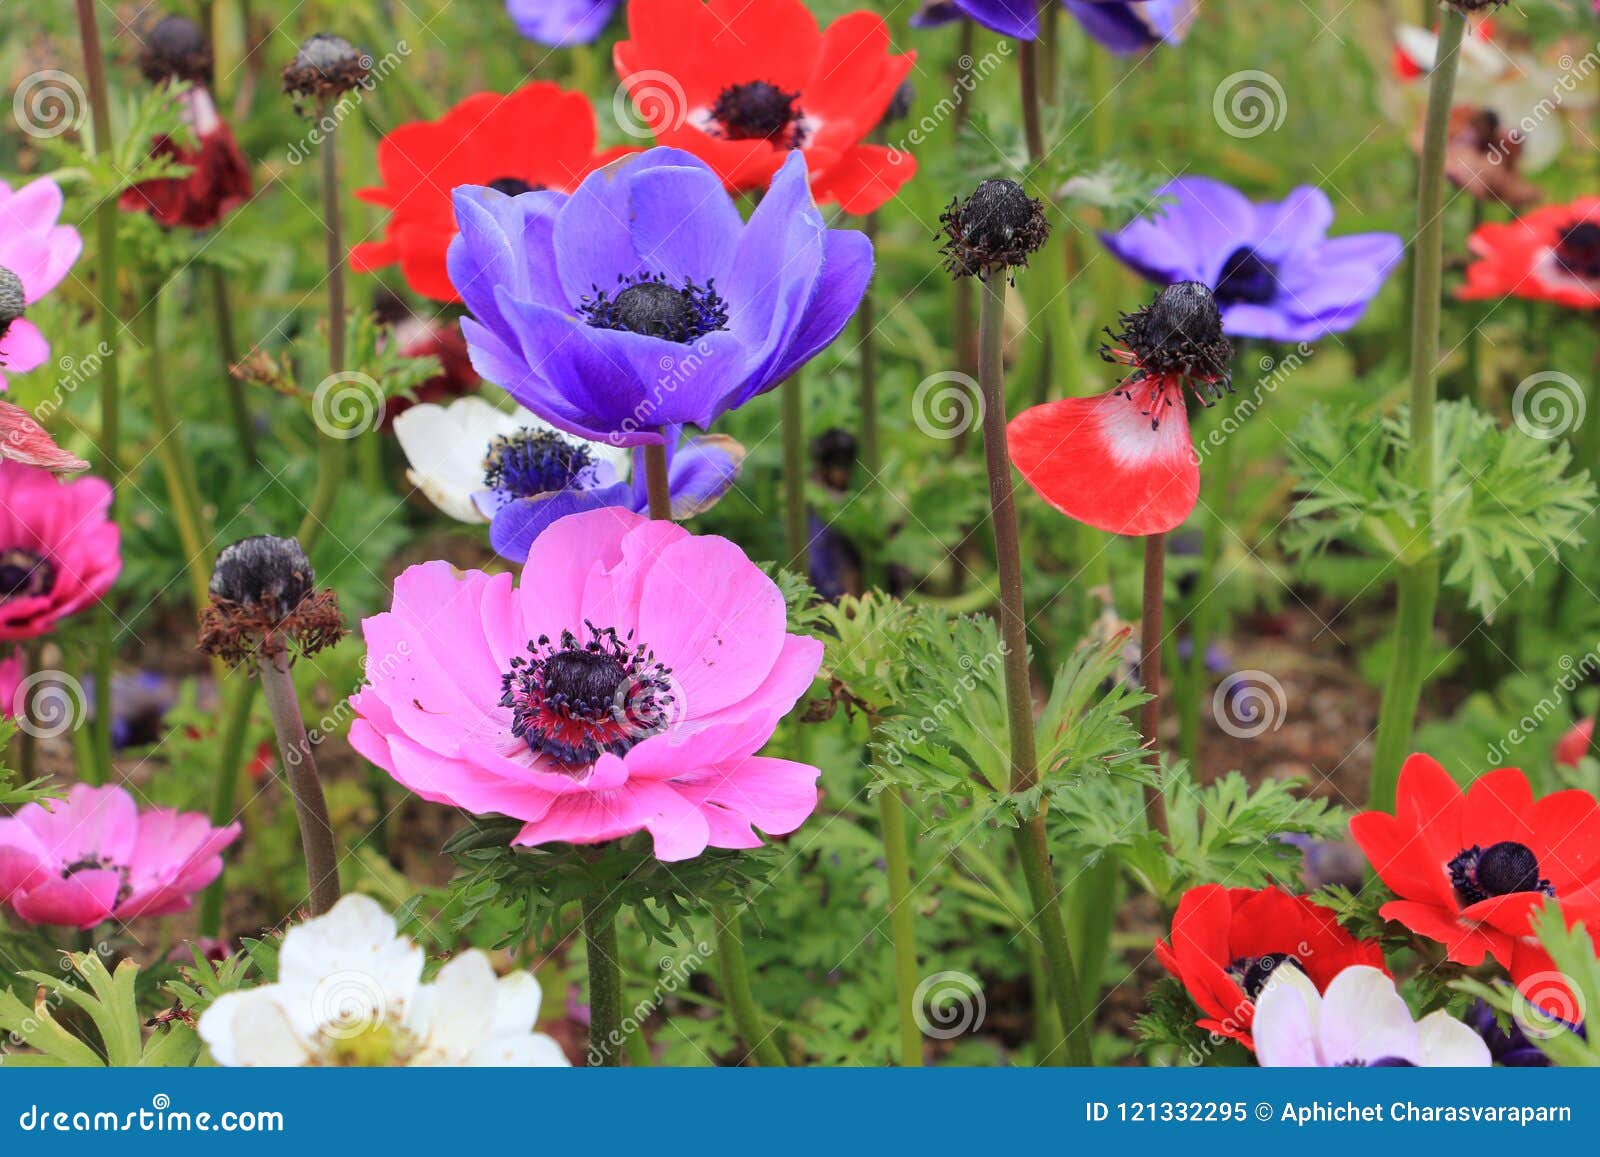 colorful poppy anemone flower anemone coronaria